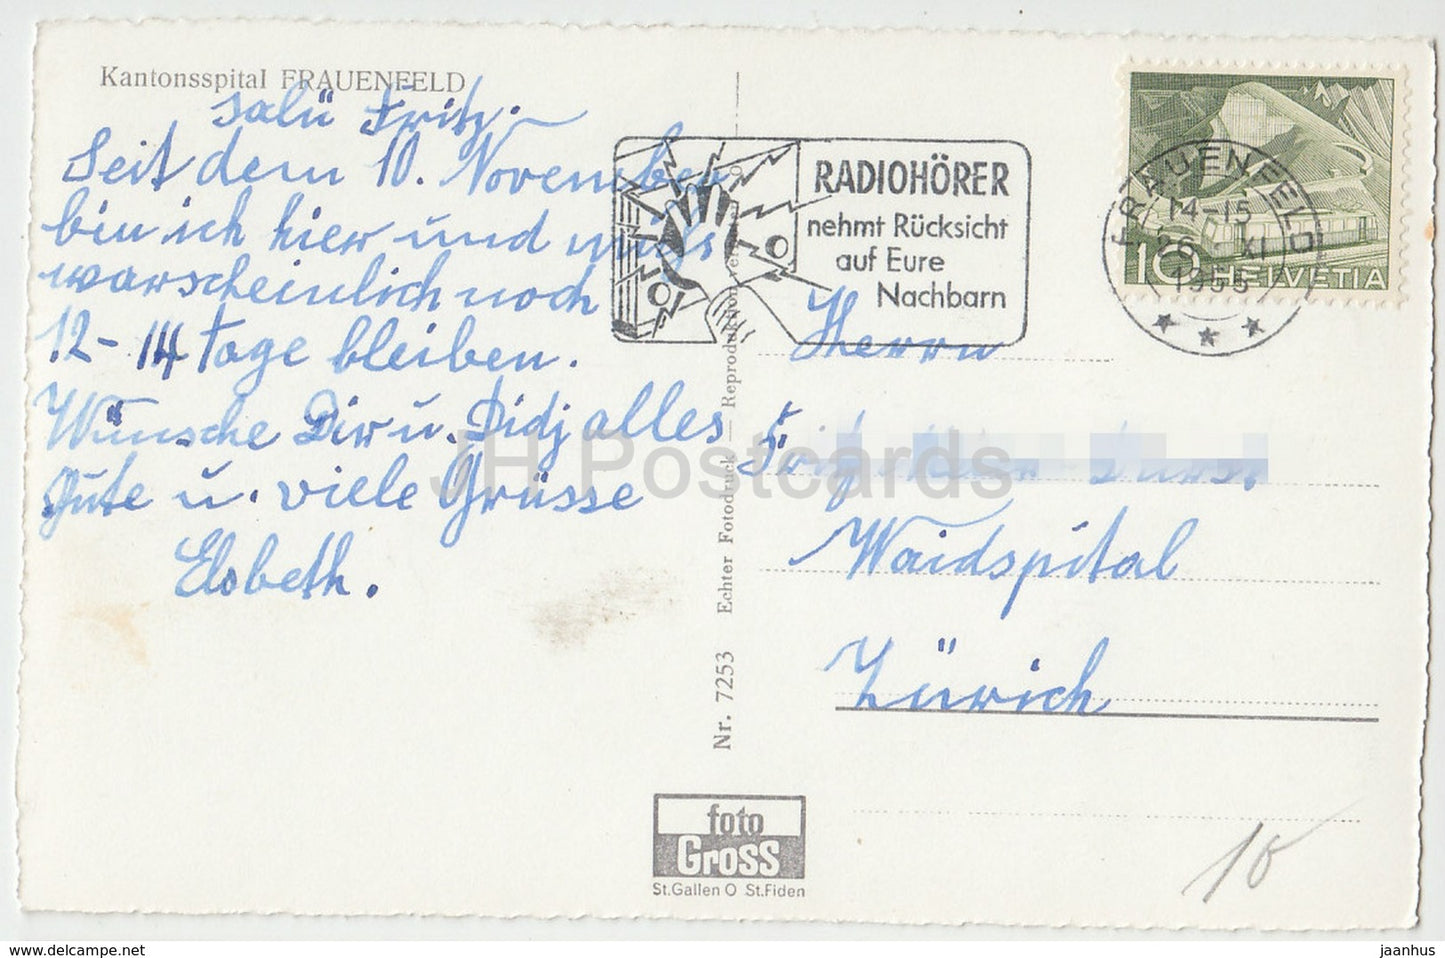 Frauenfeld - Spital - Kantonsspital - 7253 - 1955 - Switzerland - used